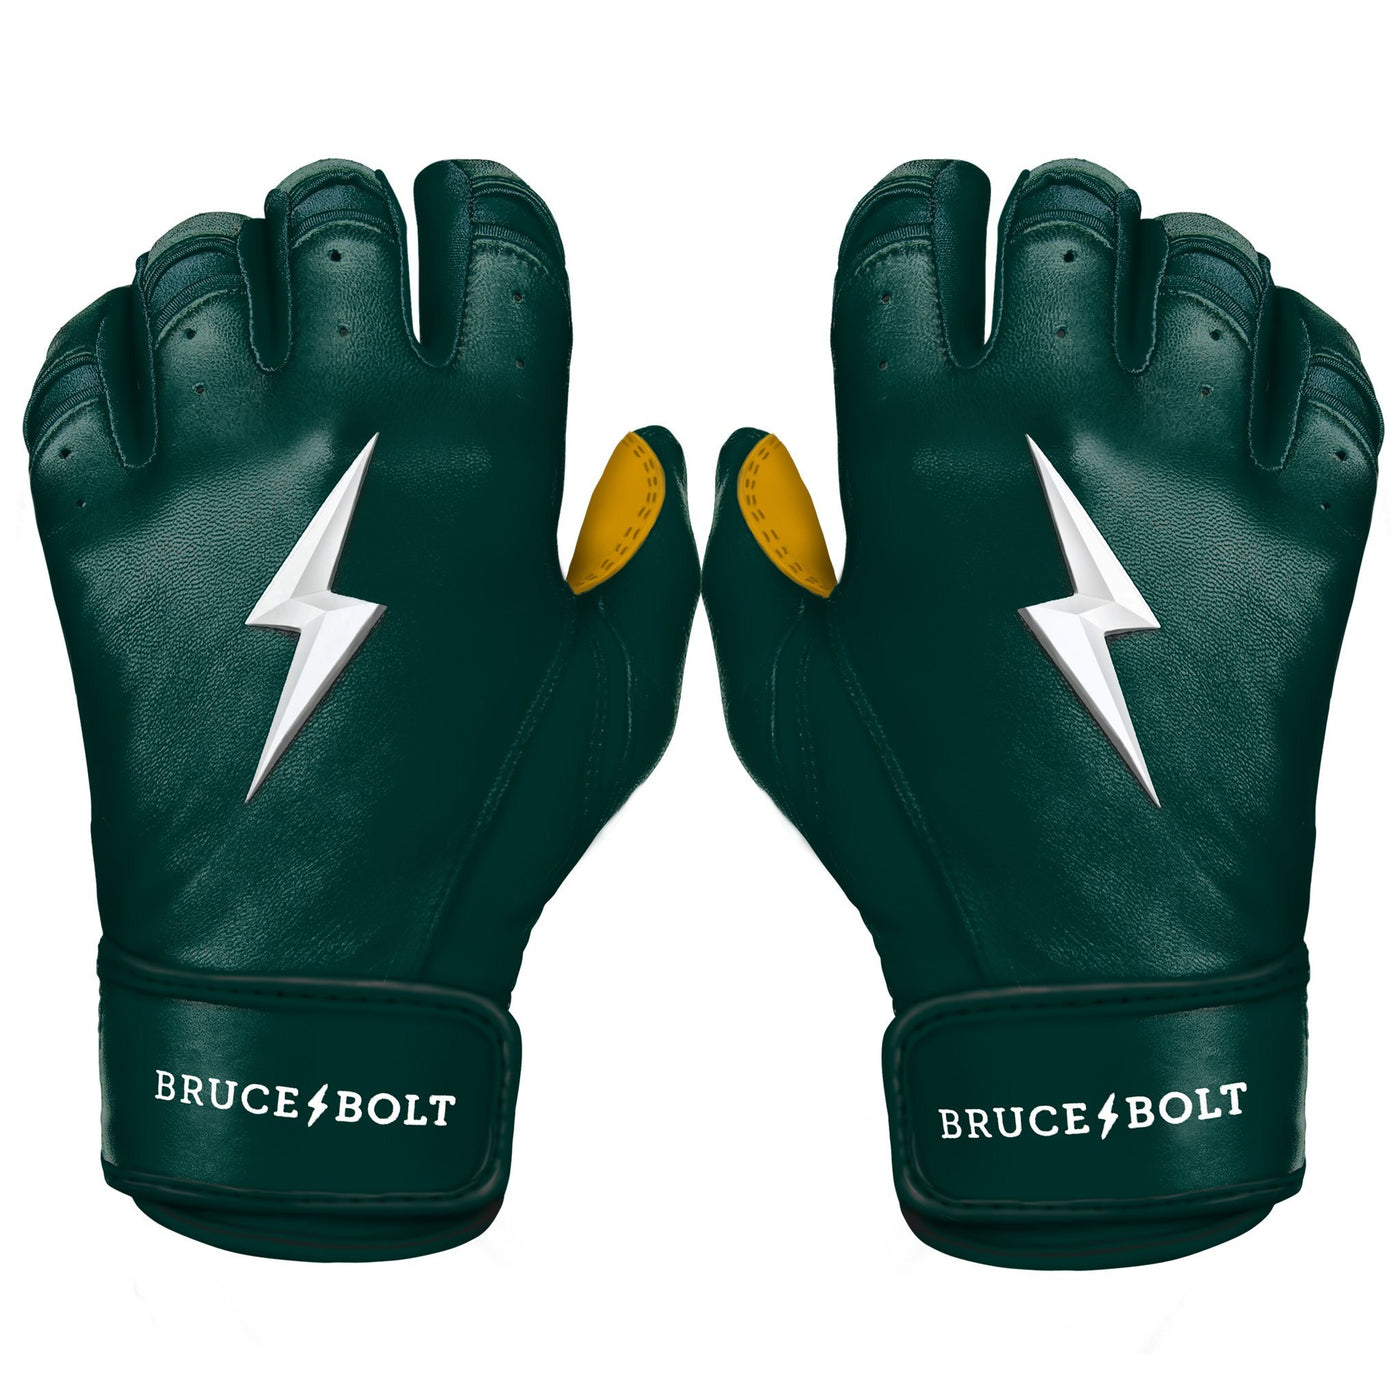 DeMarini CF Adult Batting Gloves - Dark Green